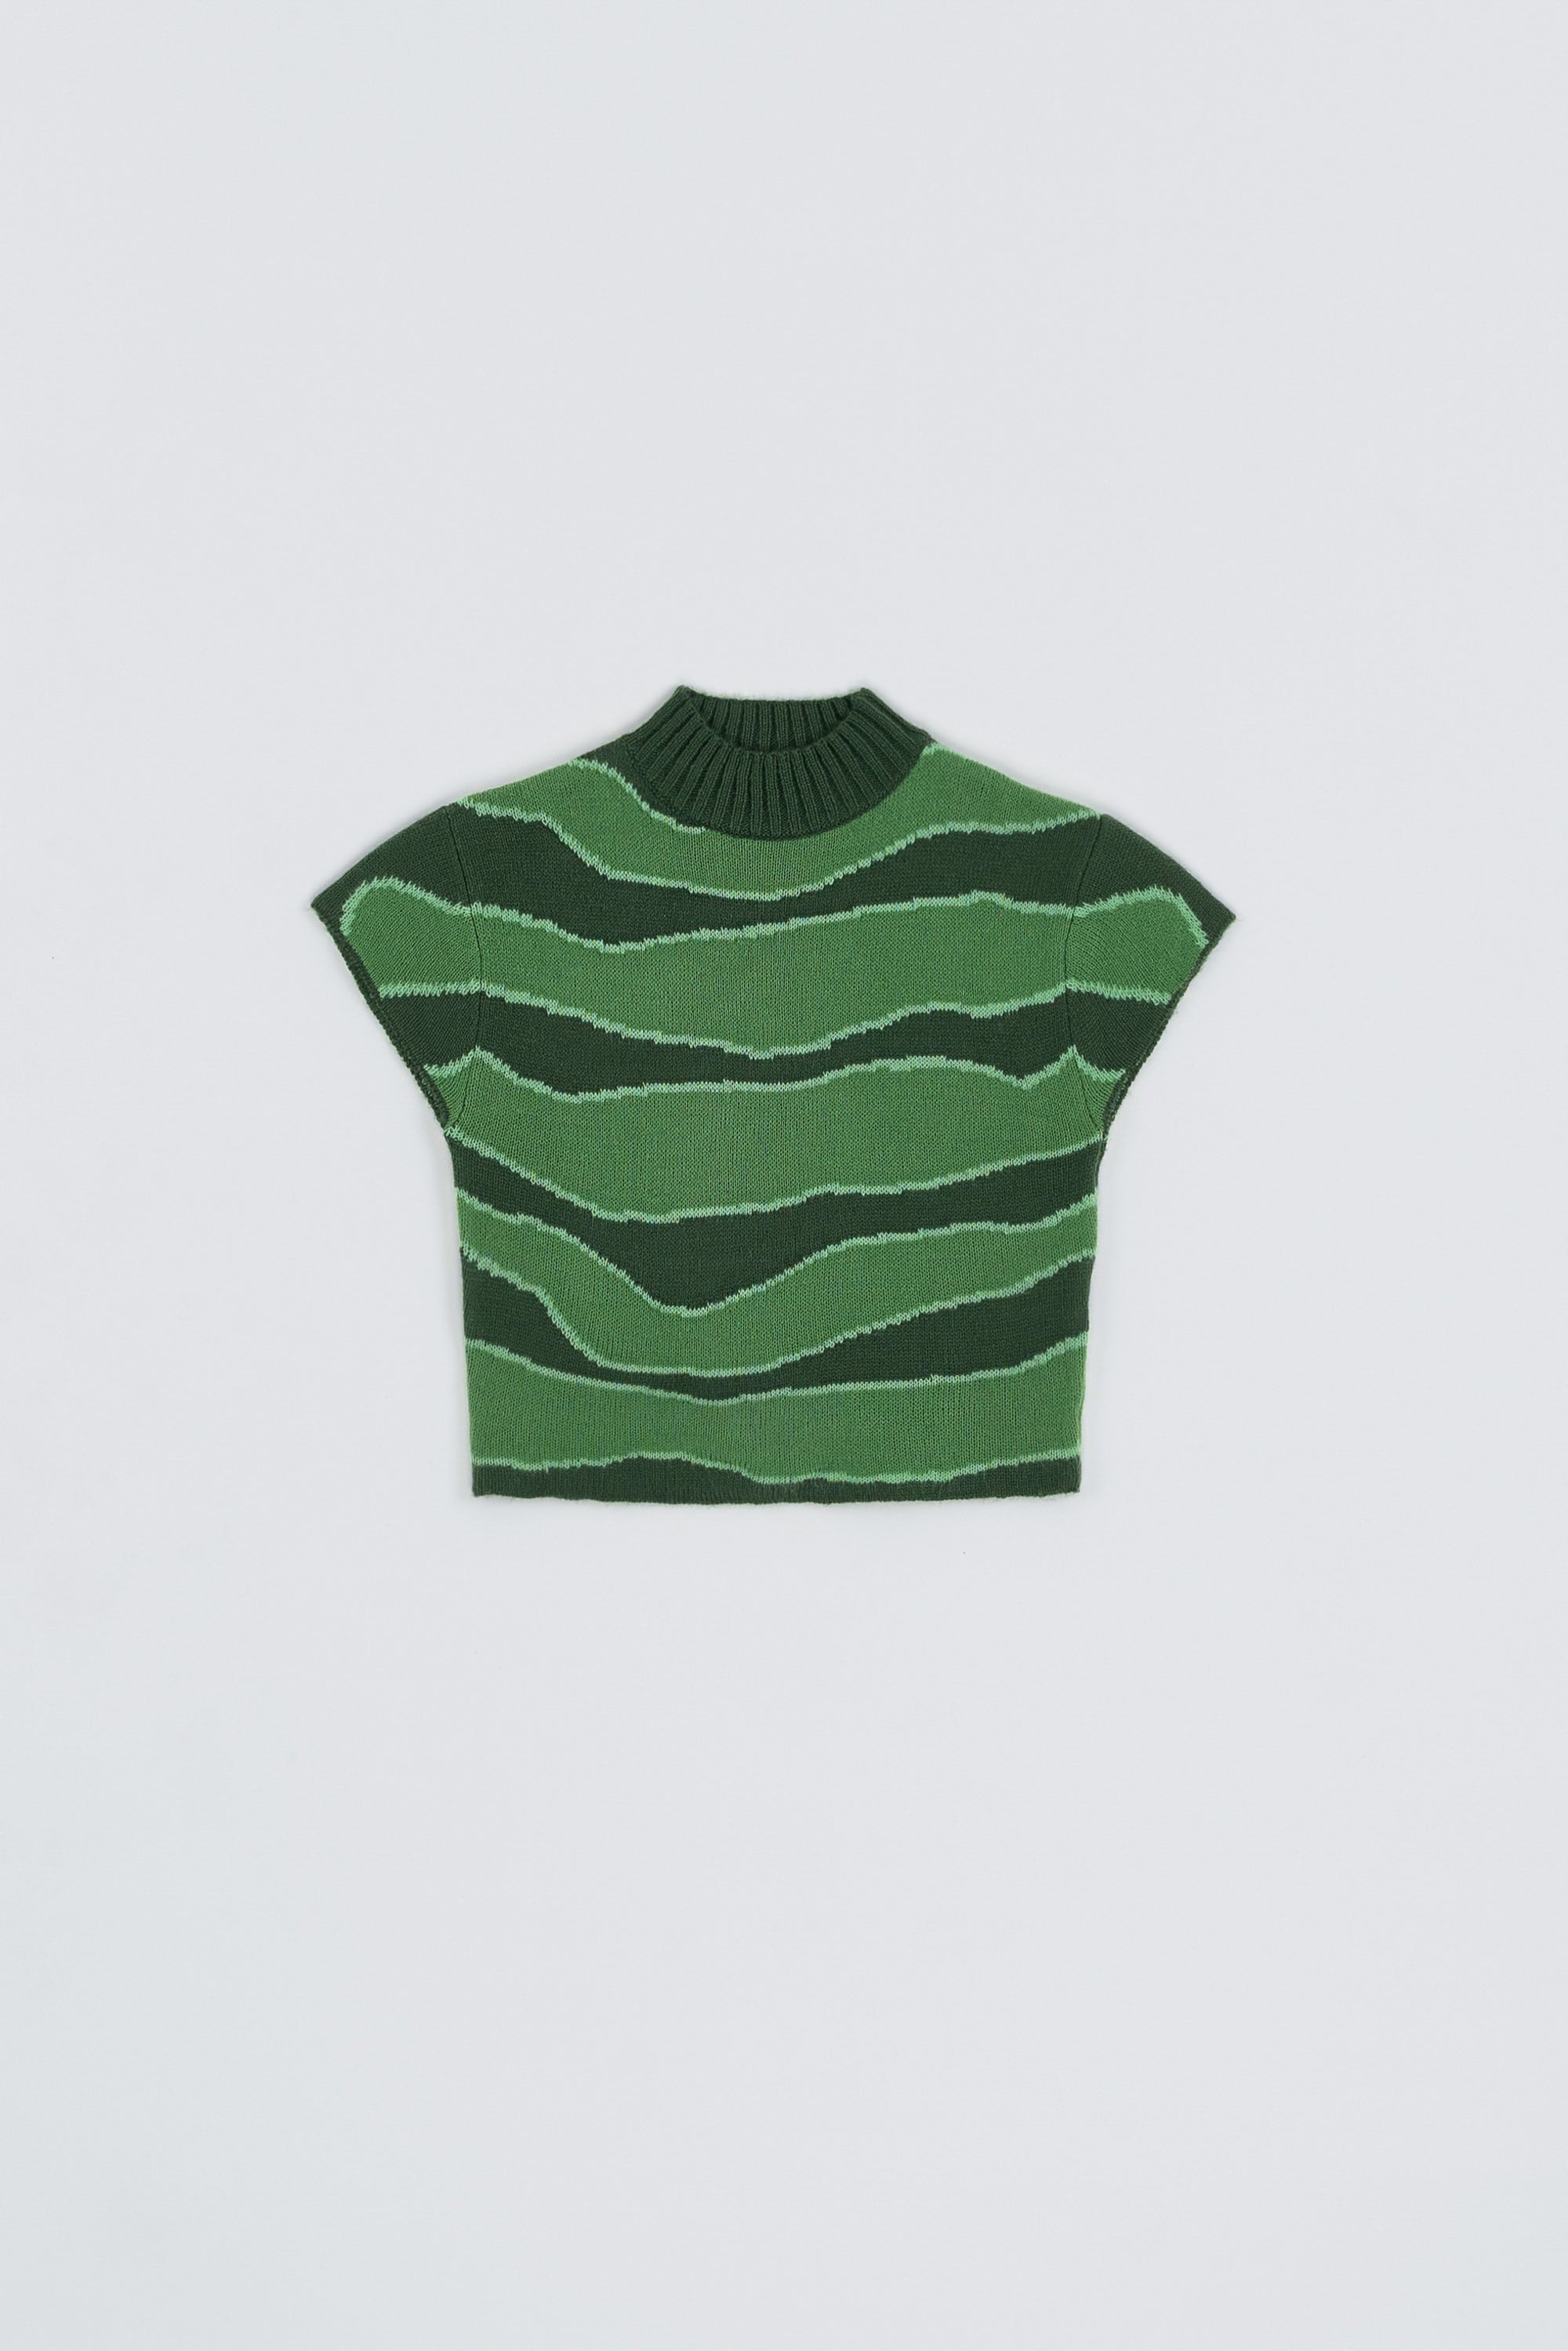 Arthur Apparel Green Nori Slim Fit Cropped Mock-Neck T-Shirt in Acrylic Jersey Knit